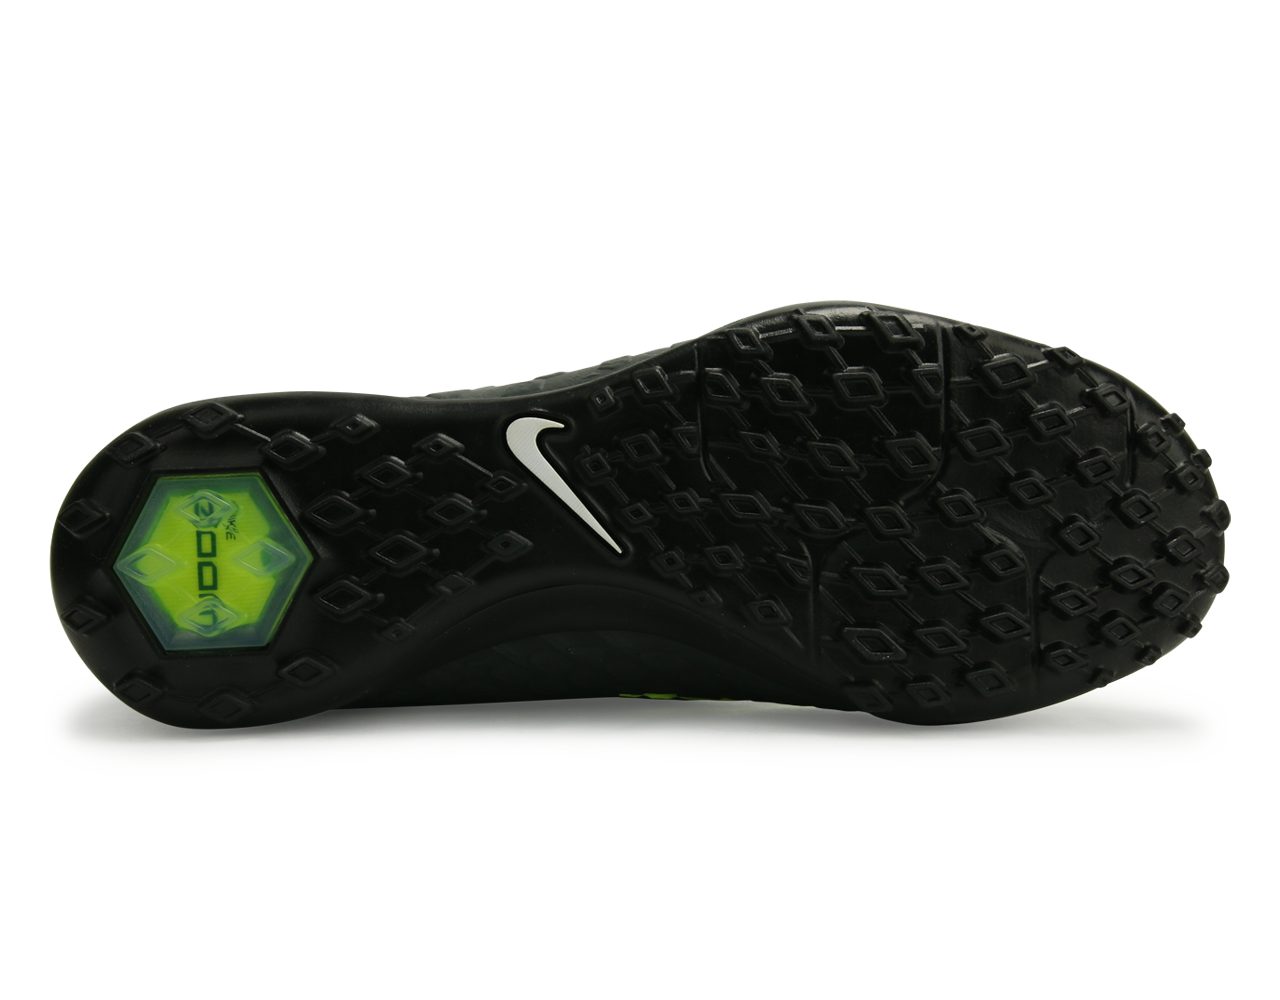 Nike Men's Hypervenom Proximo II Dynamic Fit Turf Soccer Shoes Black/Volt/Dark Grey/Wolf Grey